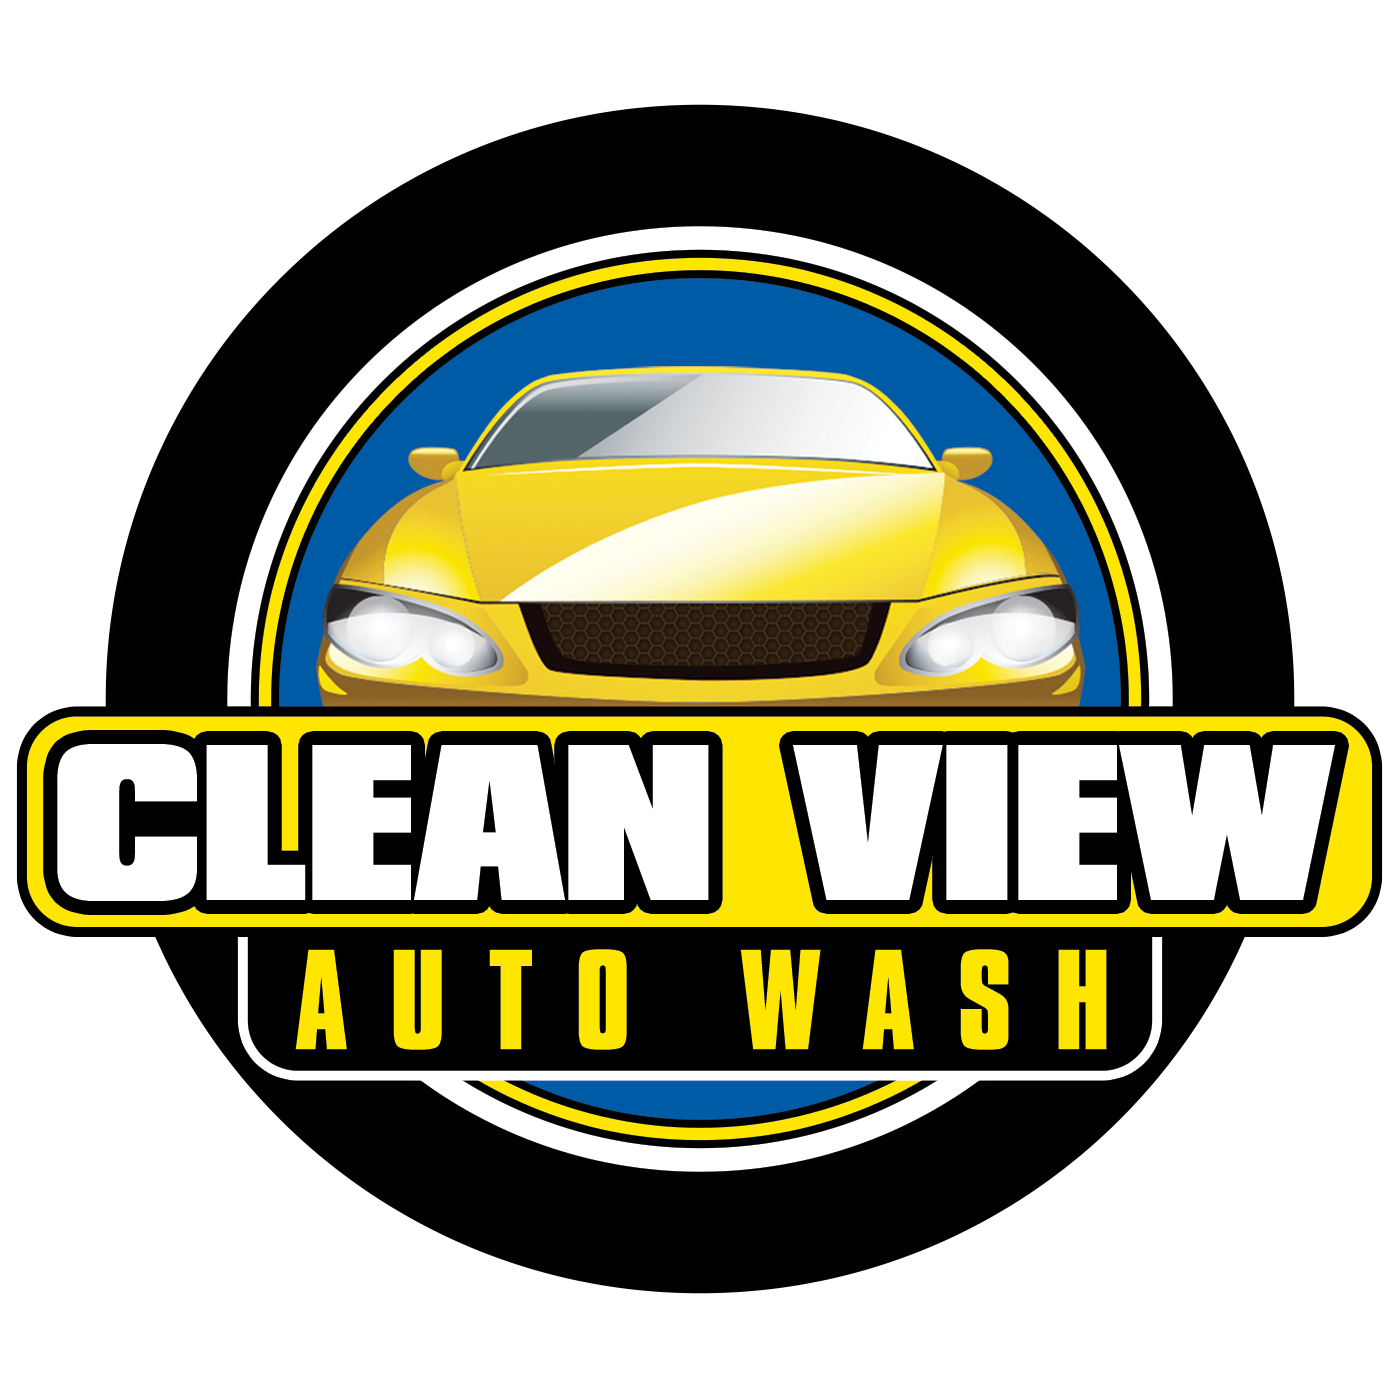 Vicrez Auto Care vac117 Pro Cleaning Car Wash Detailing Solution